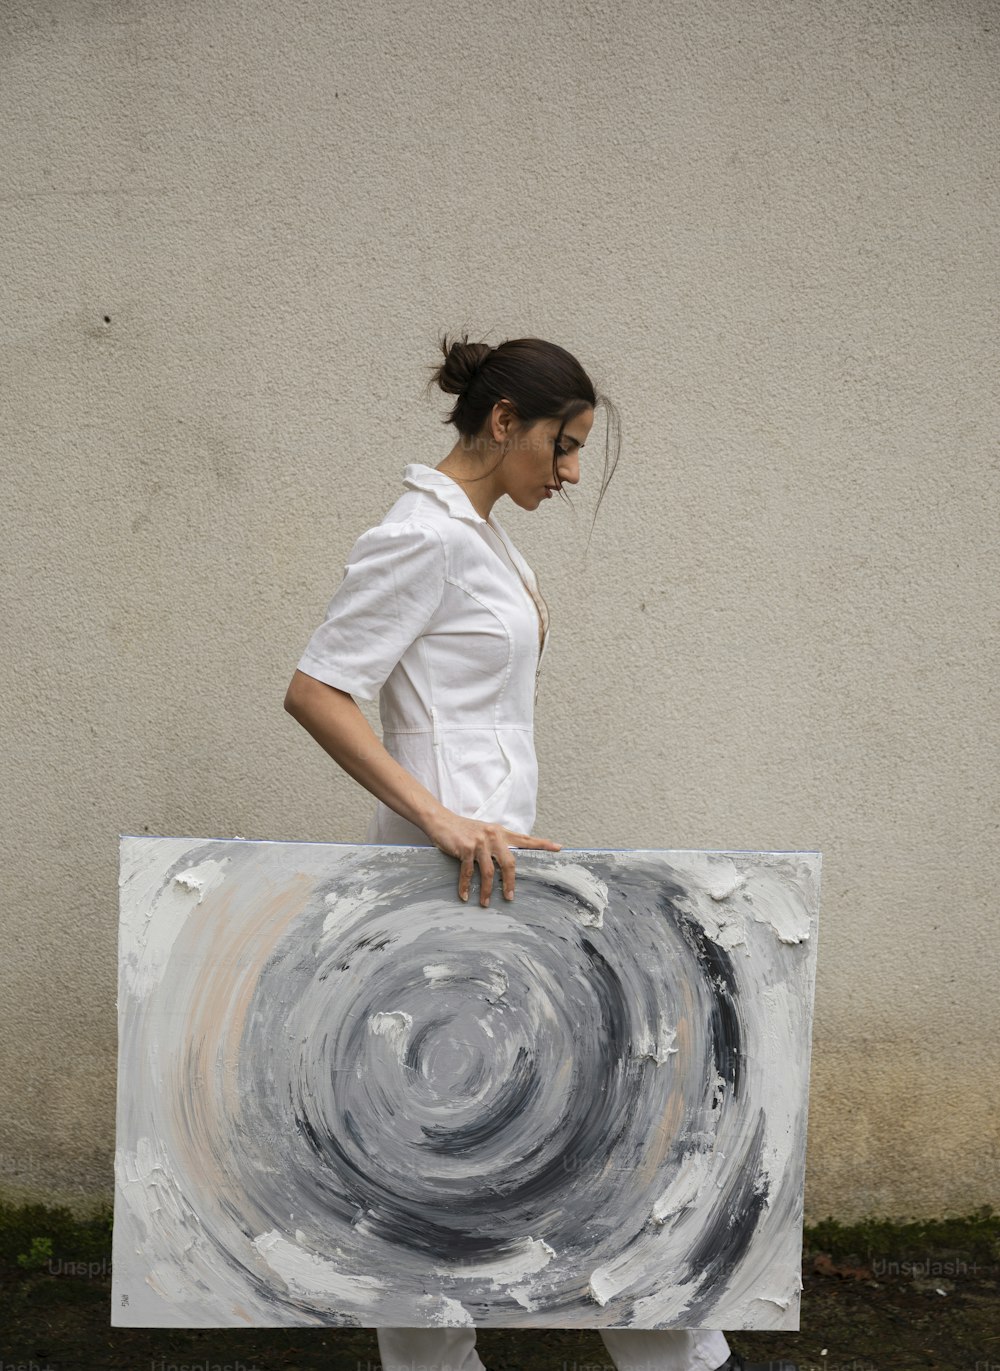 Una mujer sosteniendo una gran obra de arte